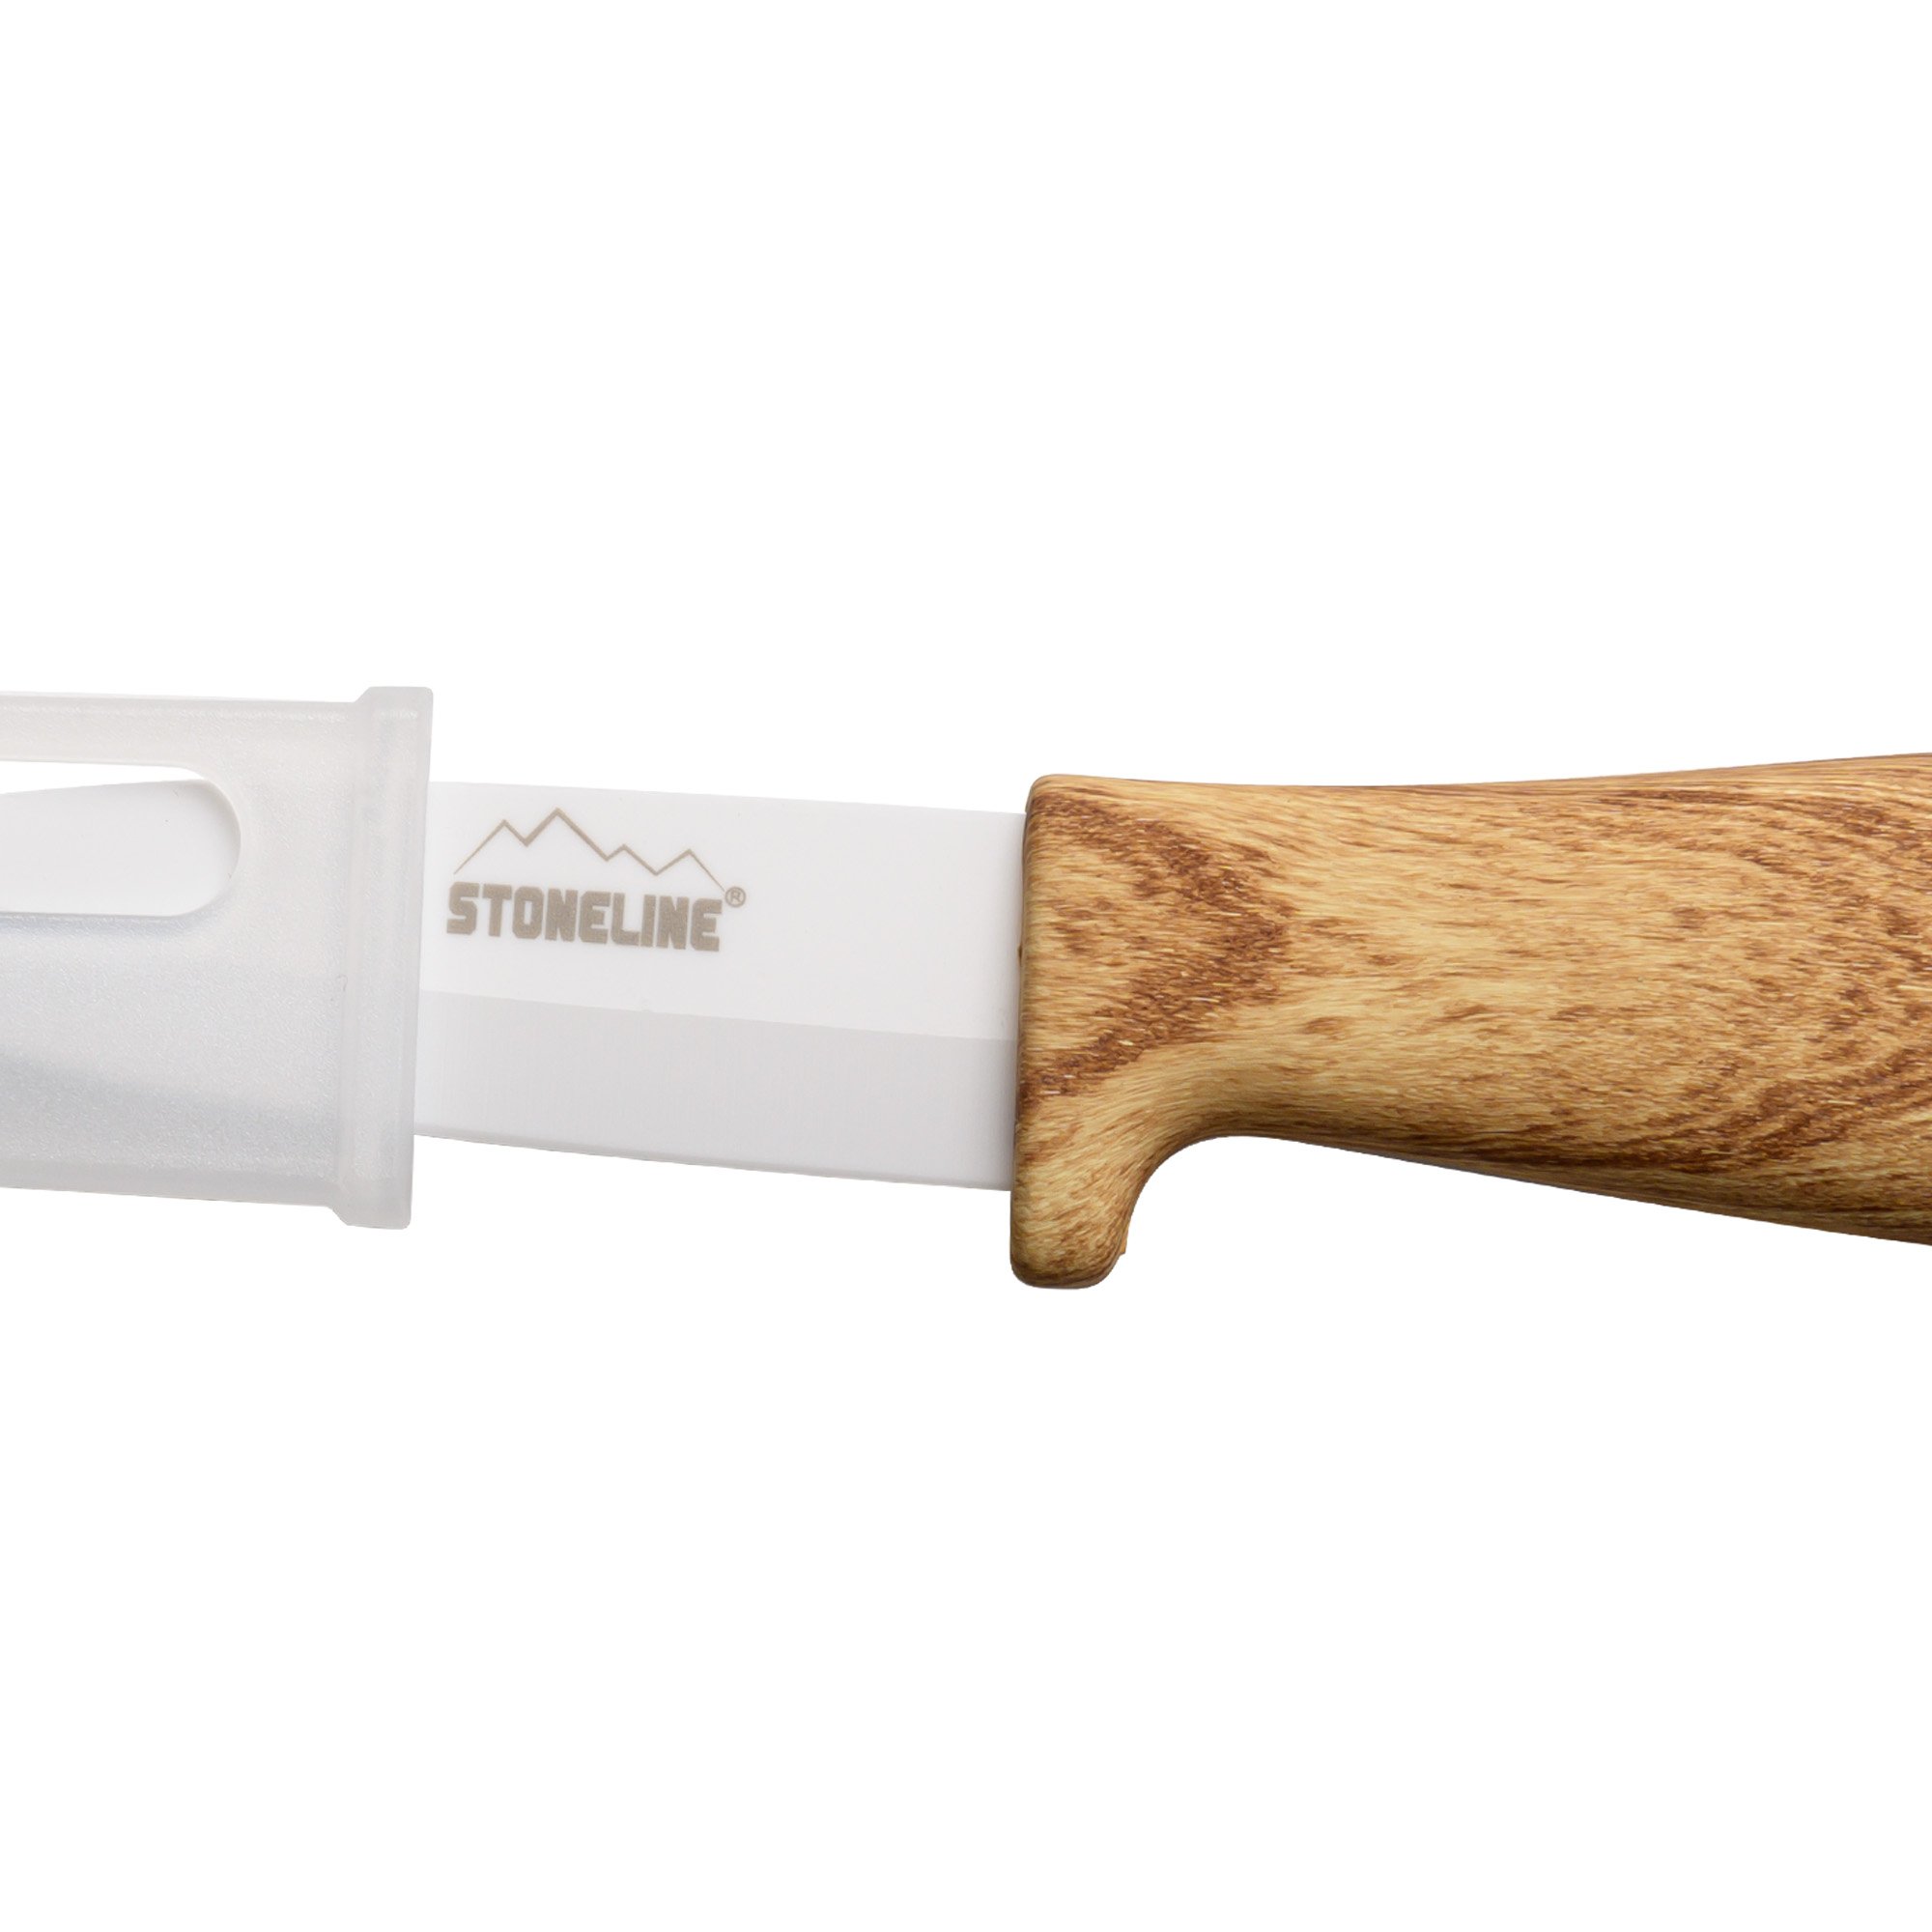 STONELINE® CERAMIC Knife 18 cm Kitchen Knife, Safety Sheath | Back to Nature